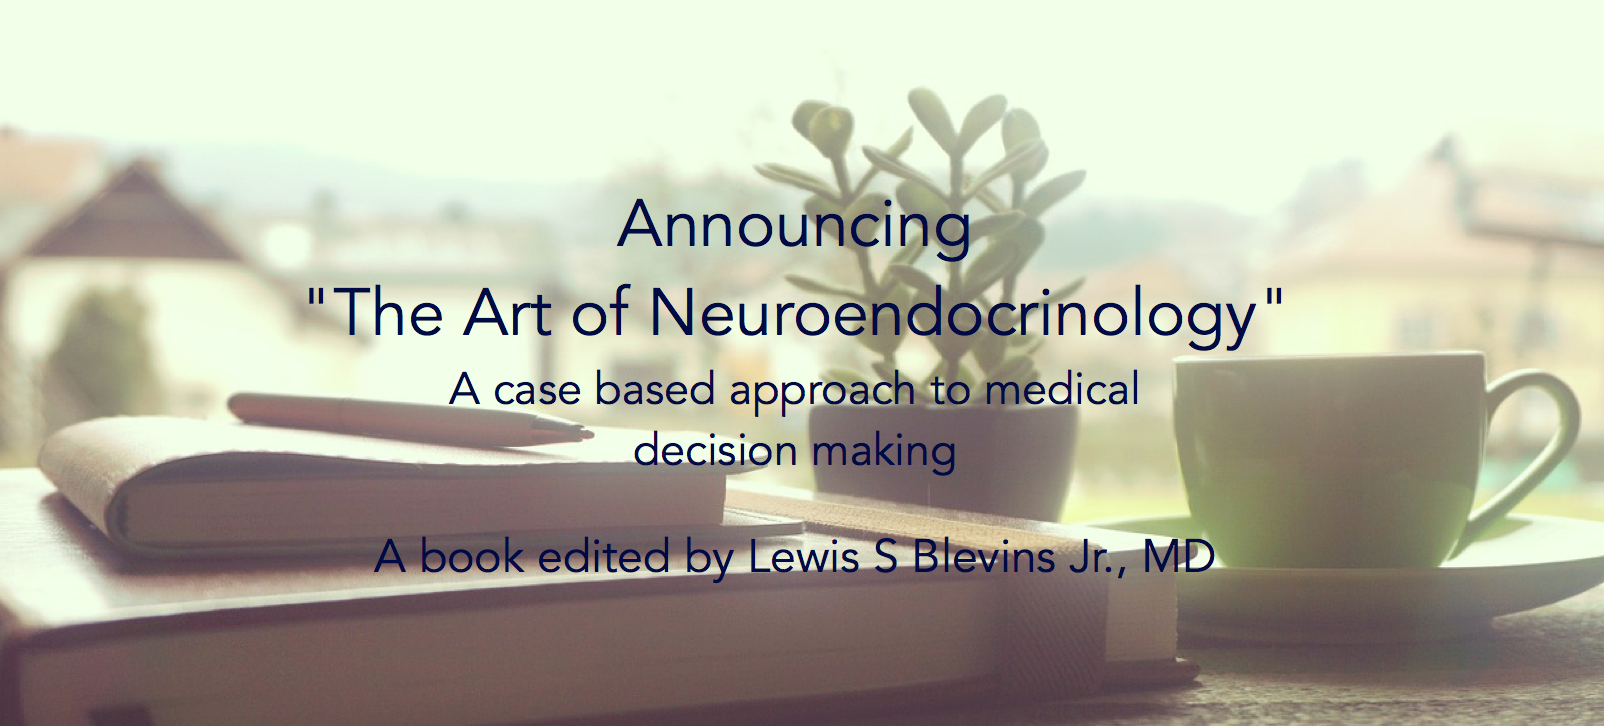 The Art of Neuroendocrinology